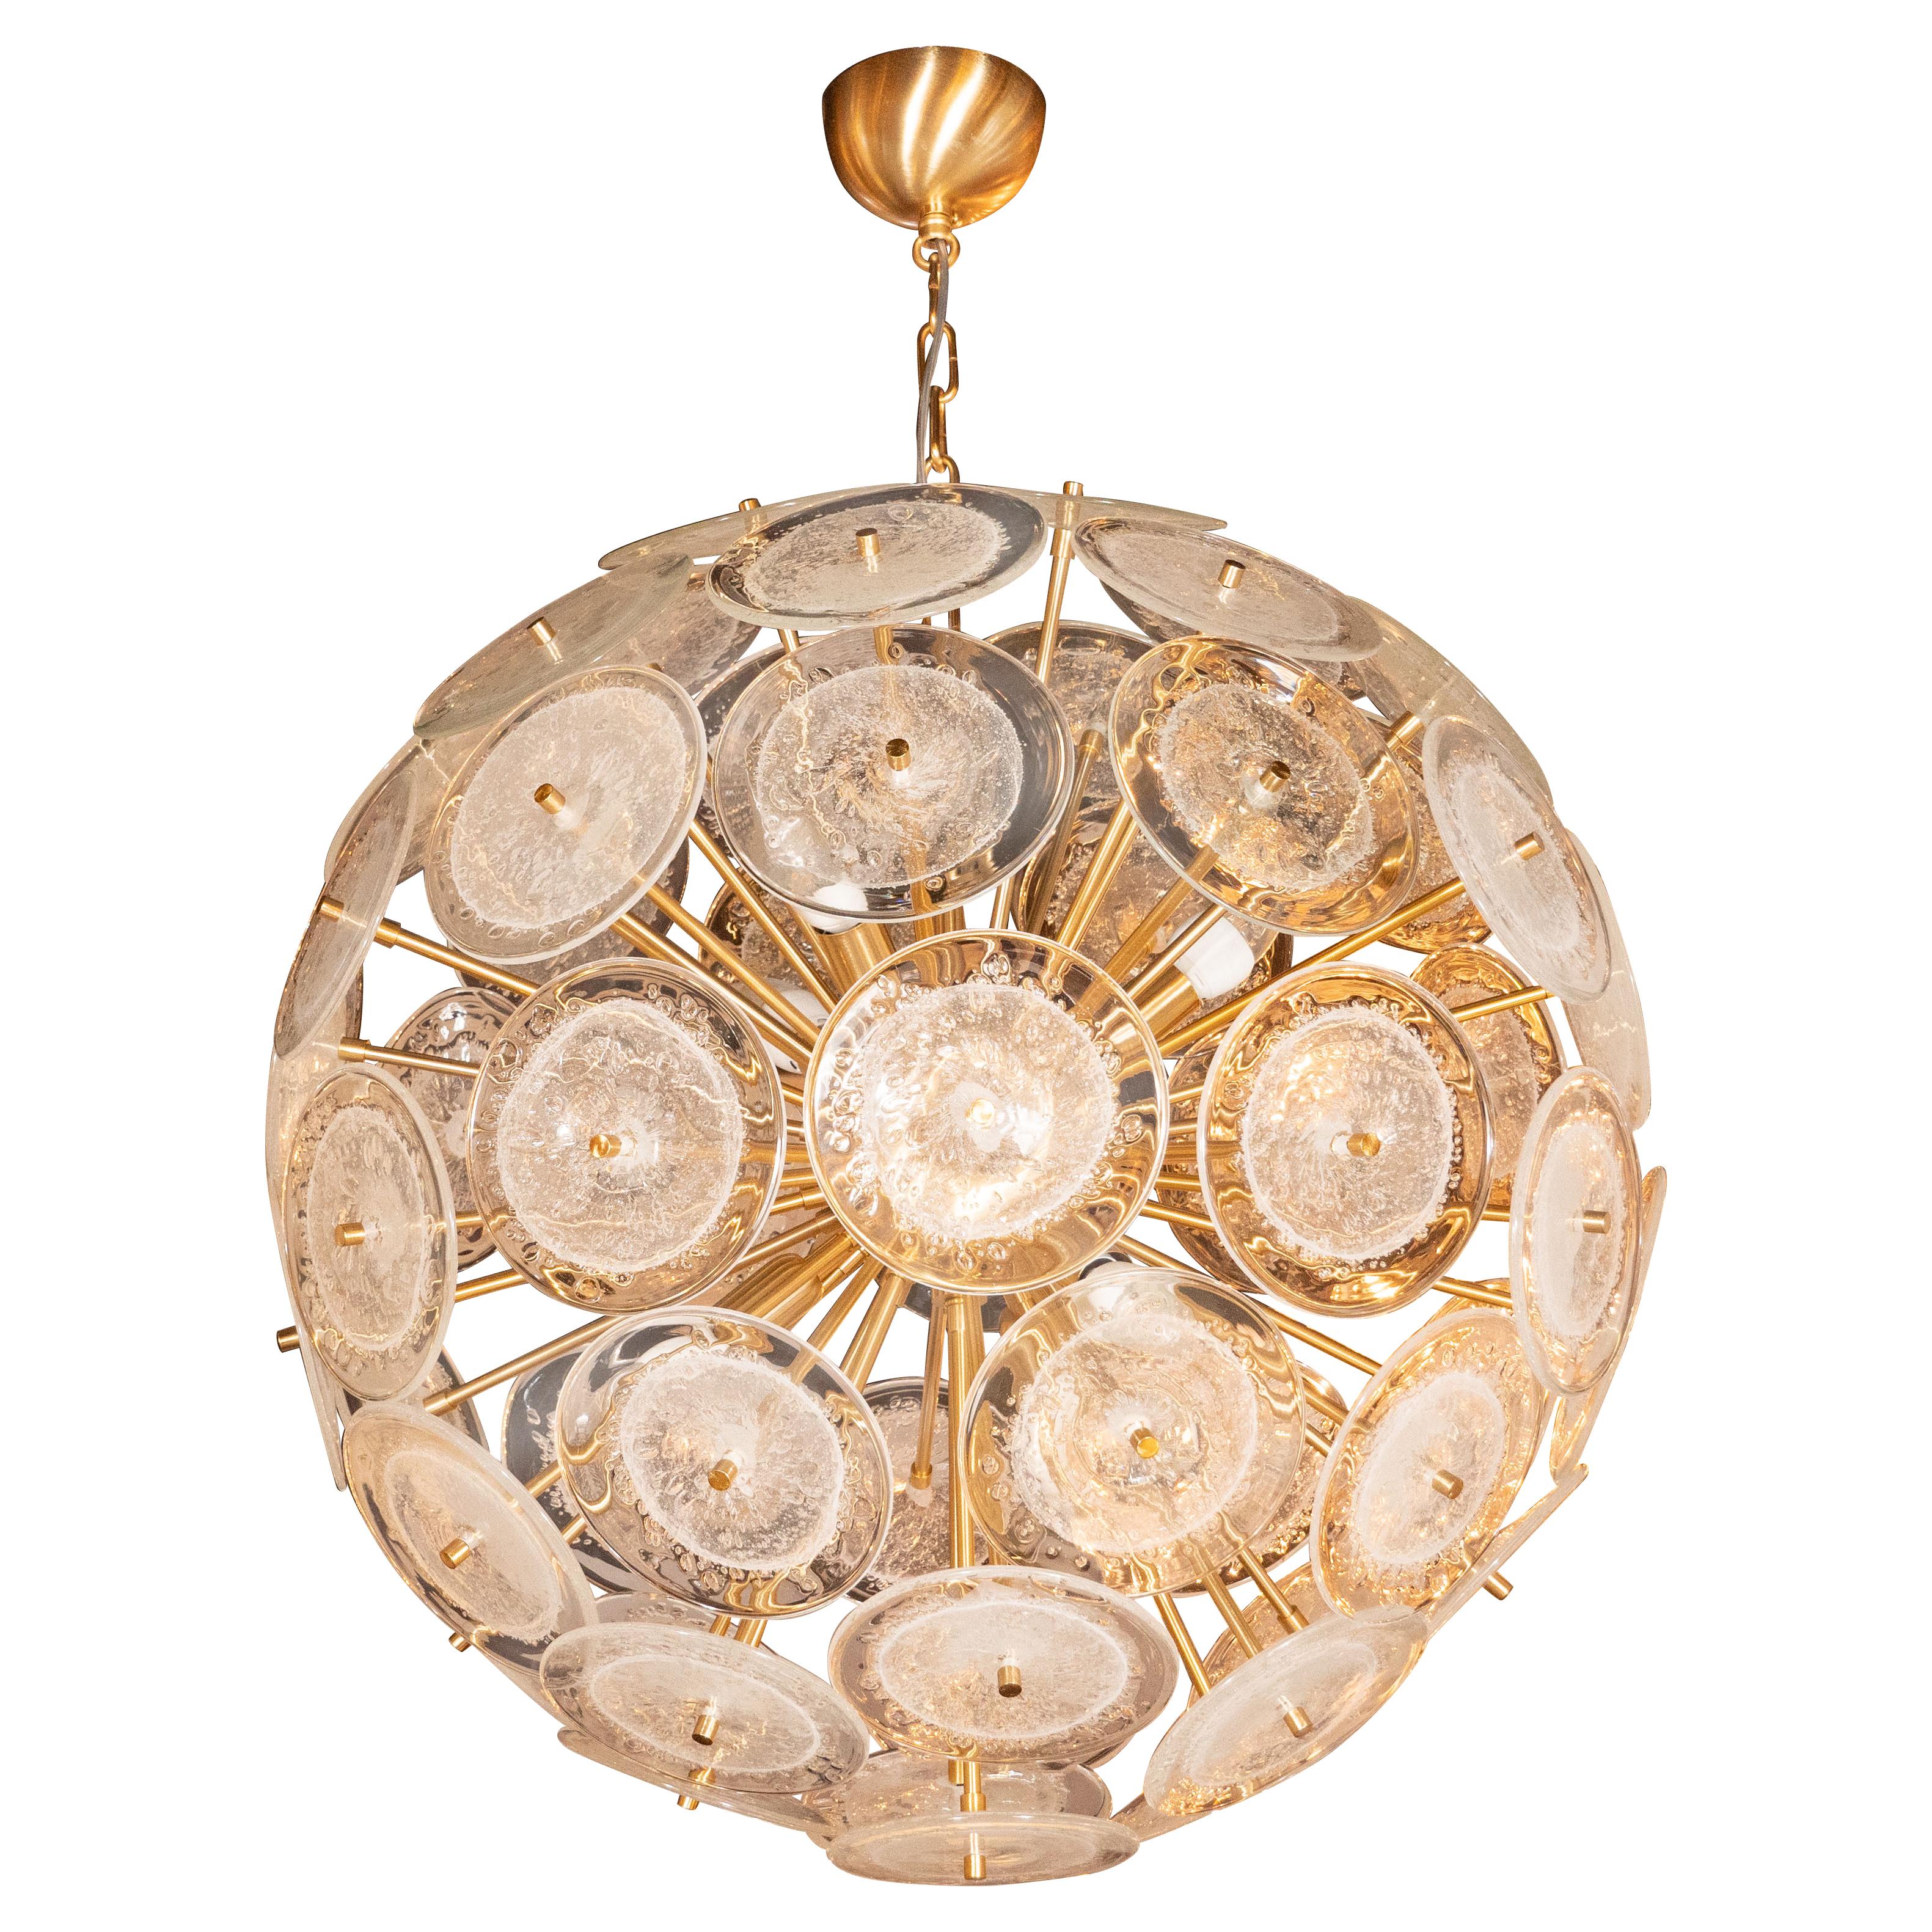 Brushed Brass Sputnik Chandelier with Handblown Translucent  Murano Glass Discs